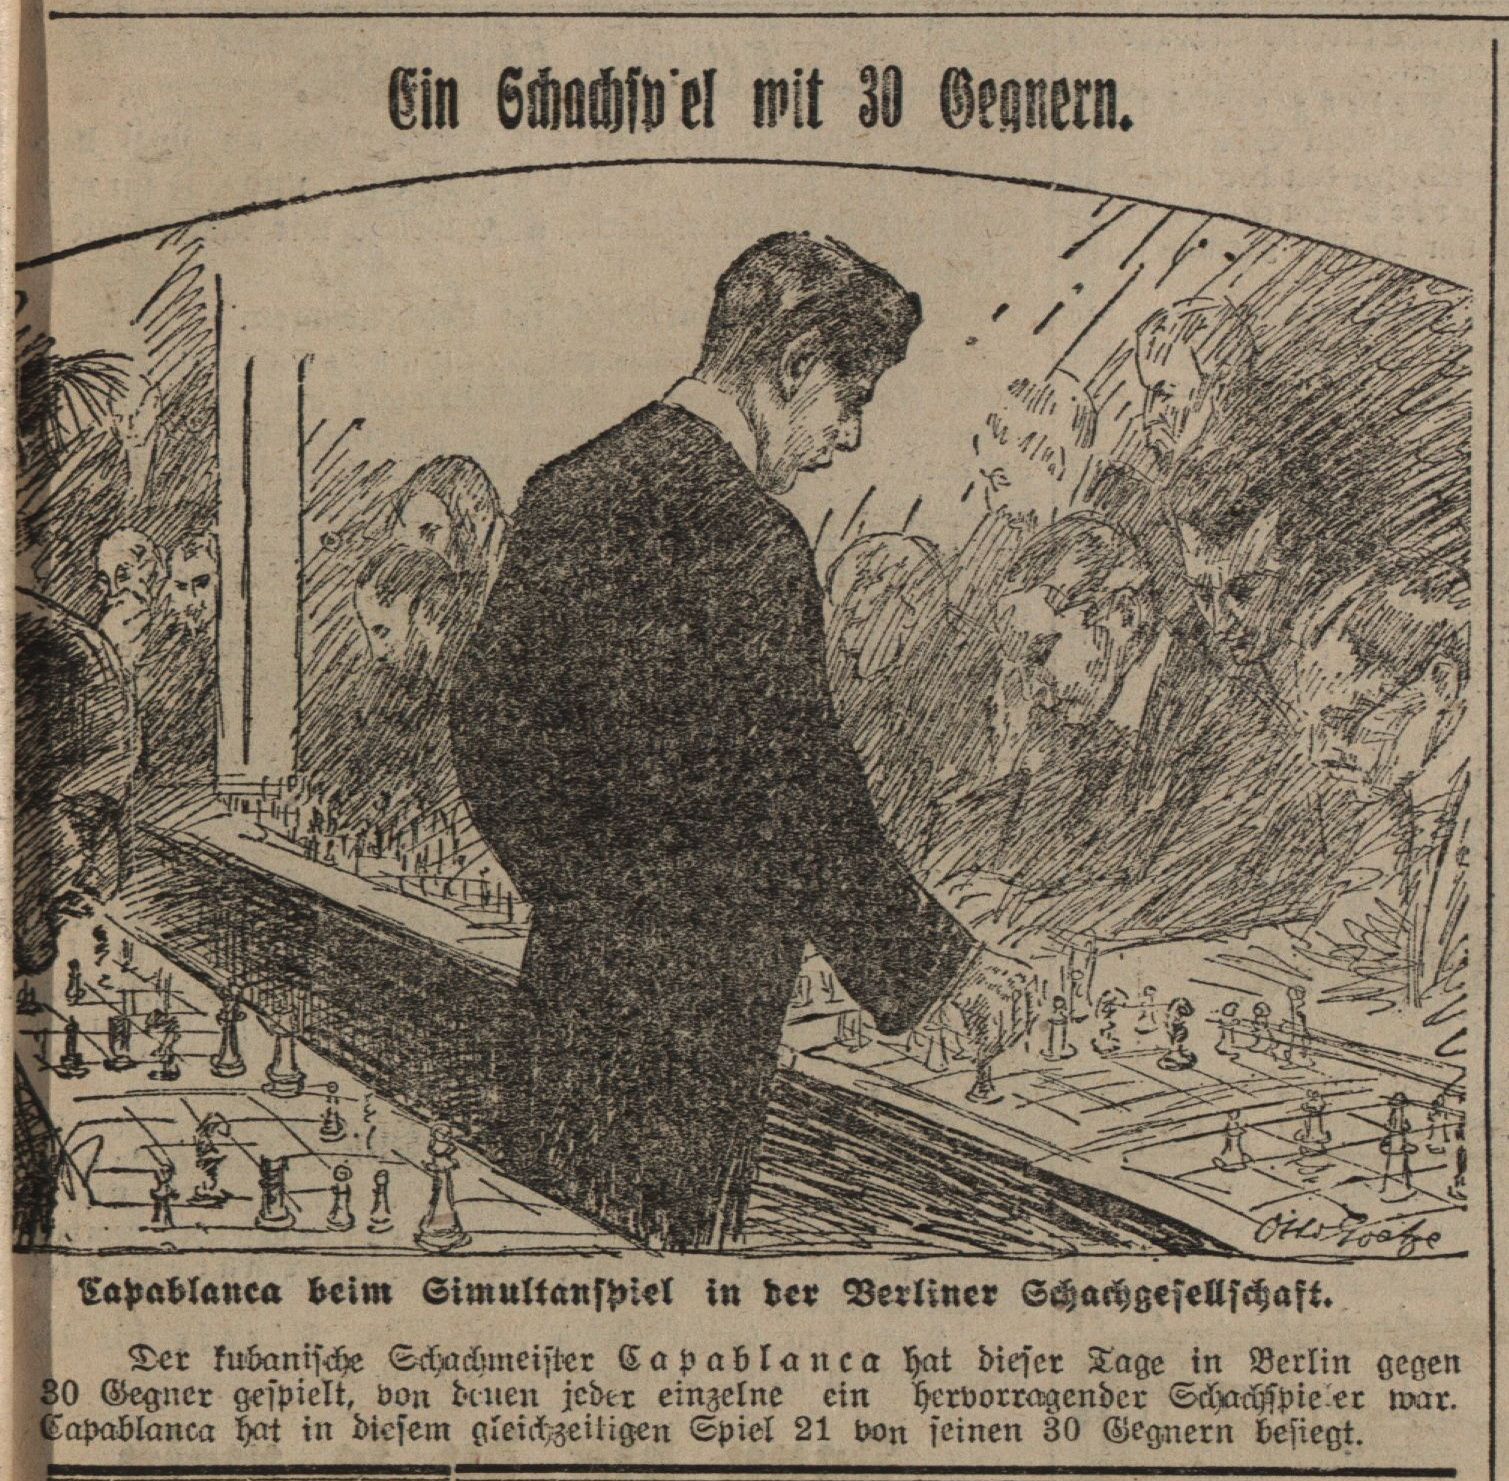 A Century of Chess: New York 1913 